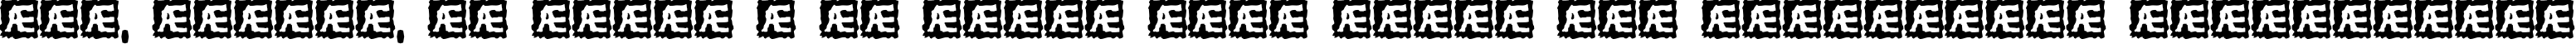 Пример написания шрифтом Amalgamate BRK текста на украинском